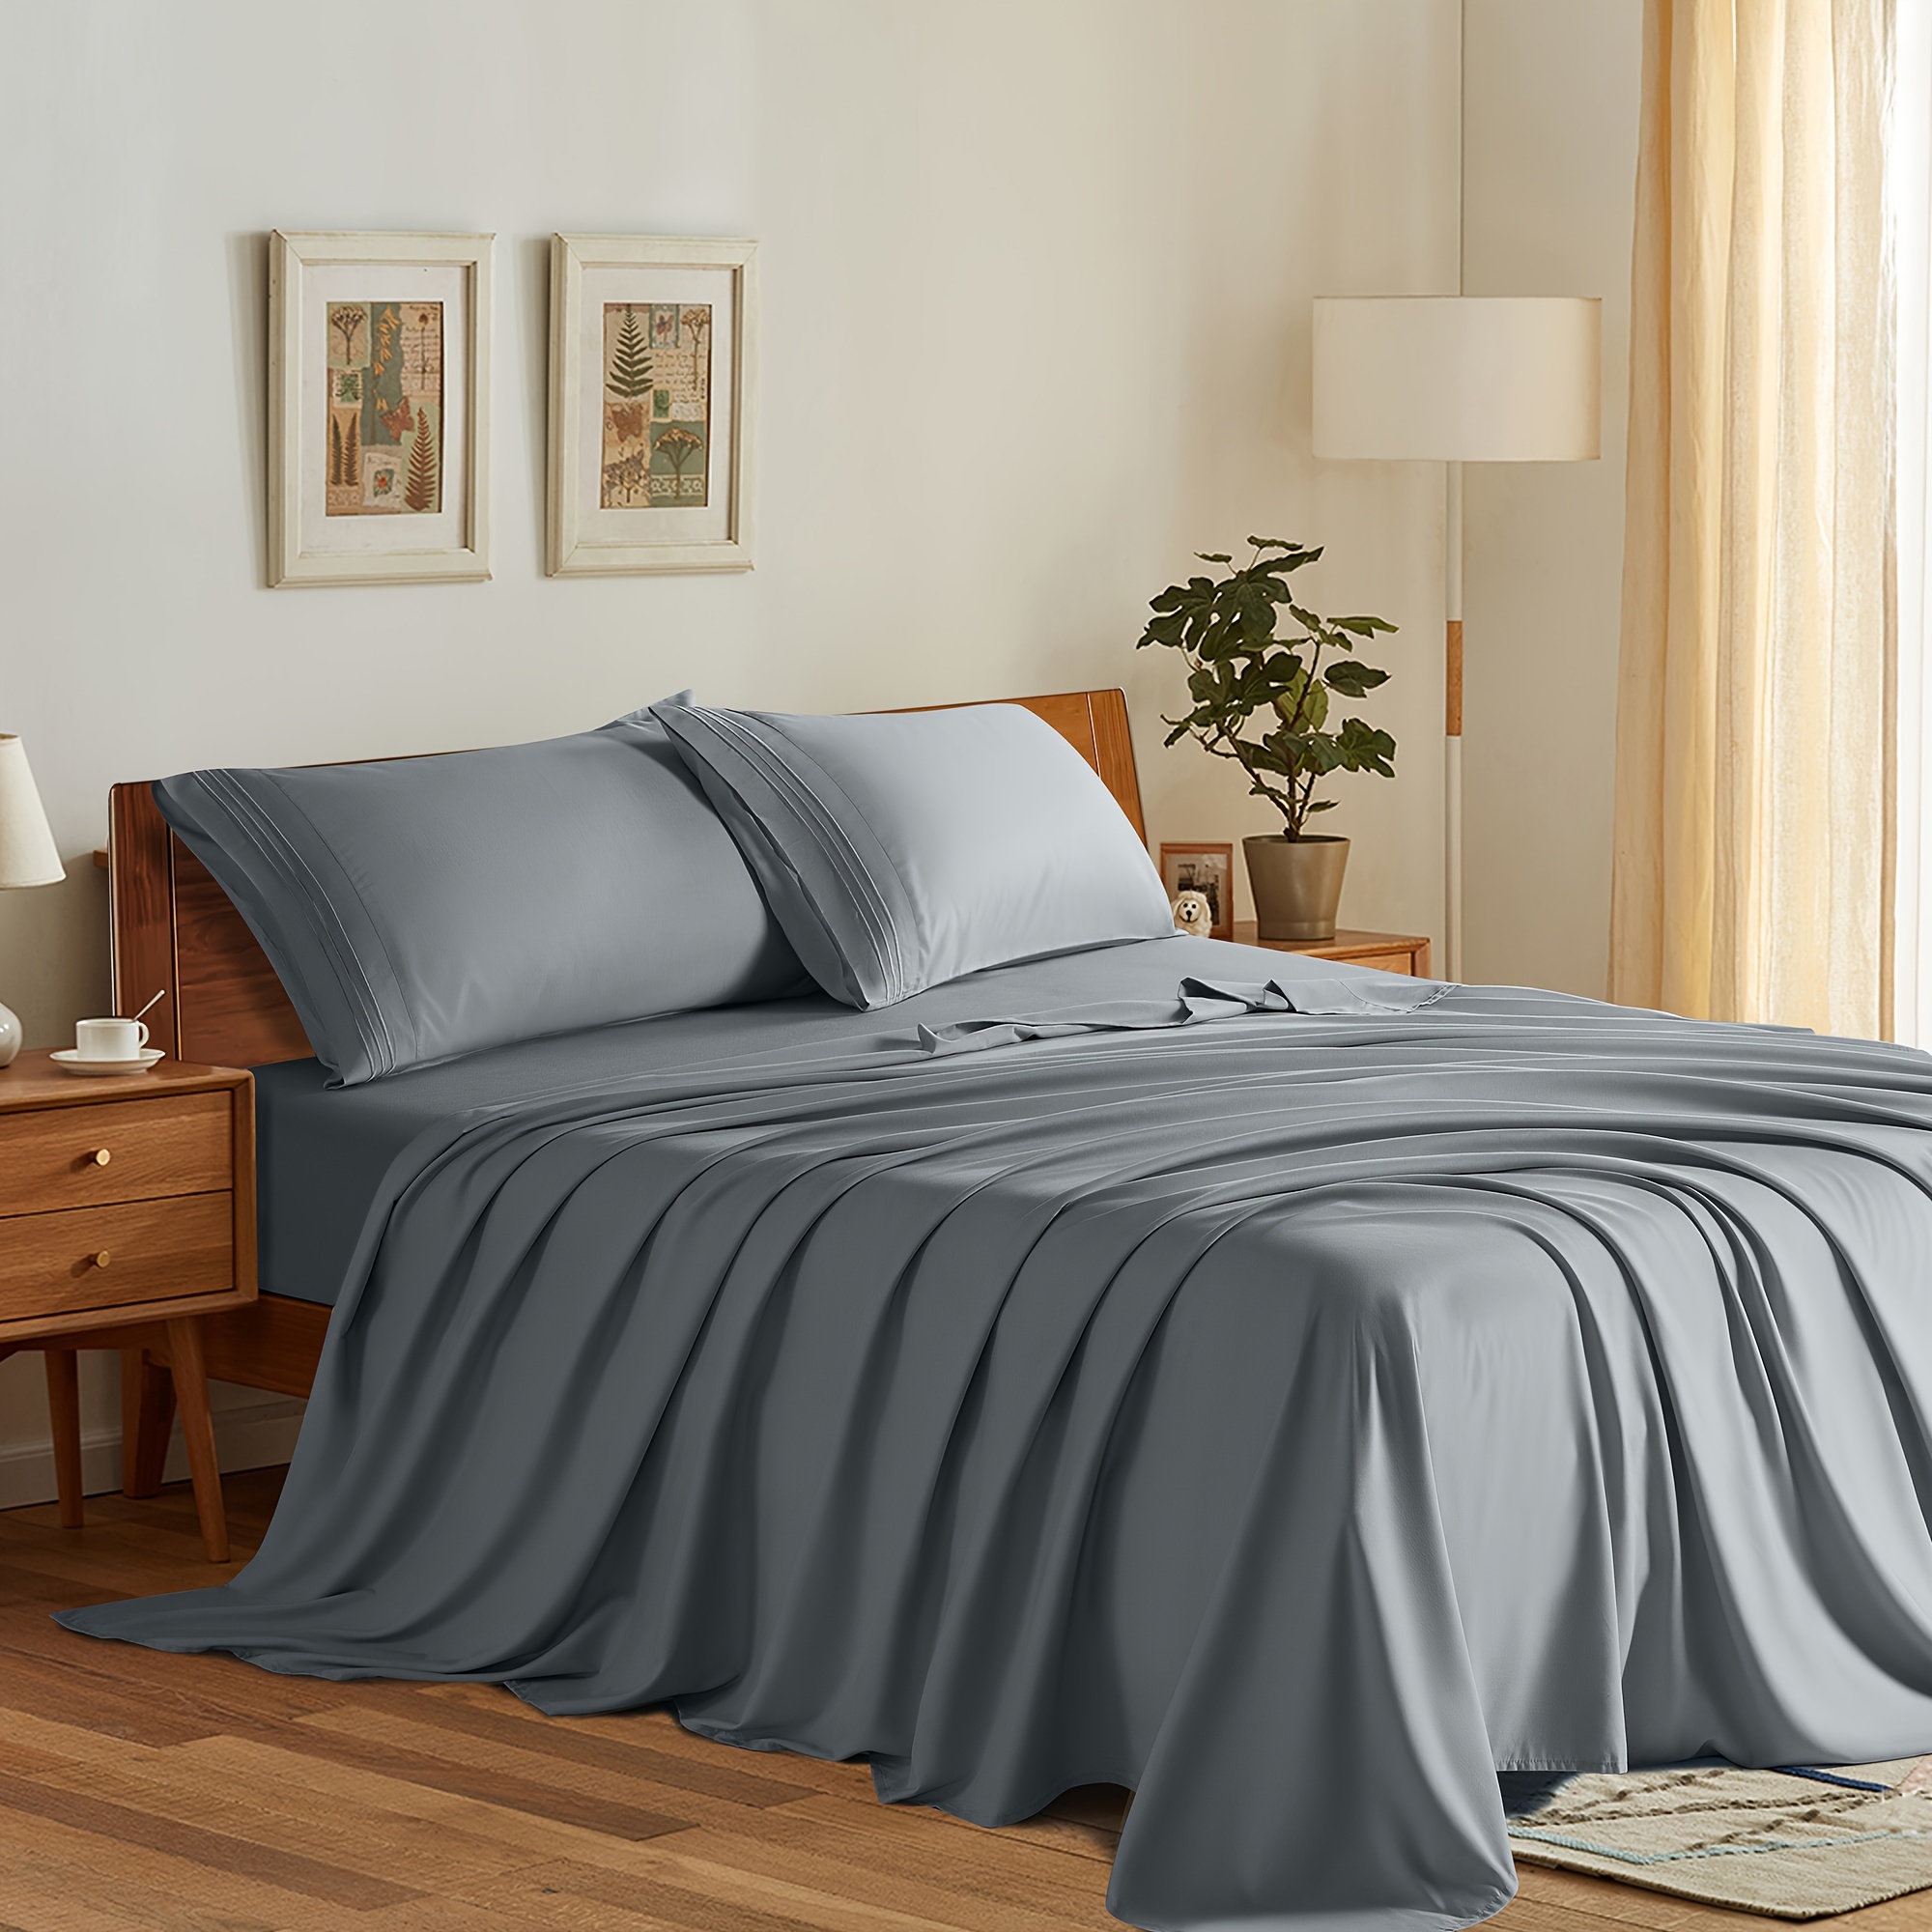 

Lbro2m Cooling 4 Piece Luxury Bed Sheets Set, 1800 Series Microfiber Bed Sheets, 16" Deep Pocket